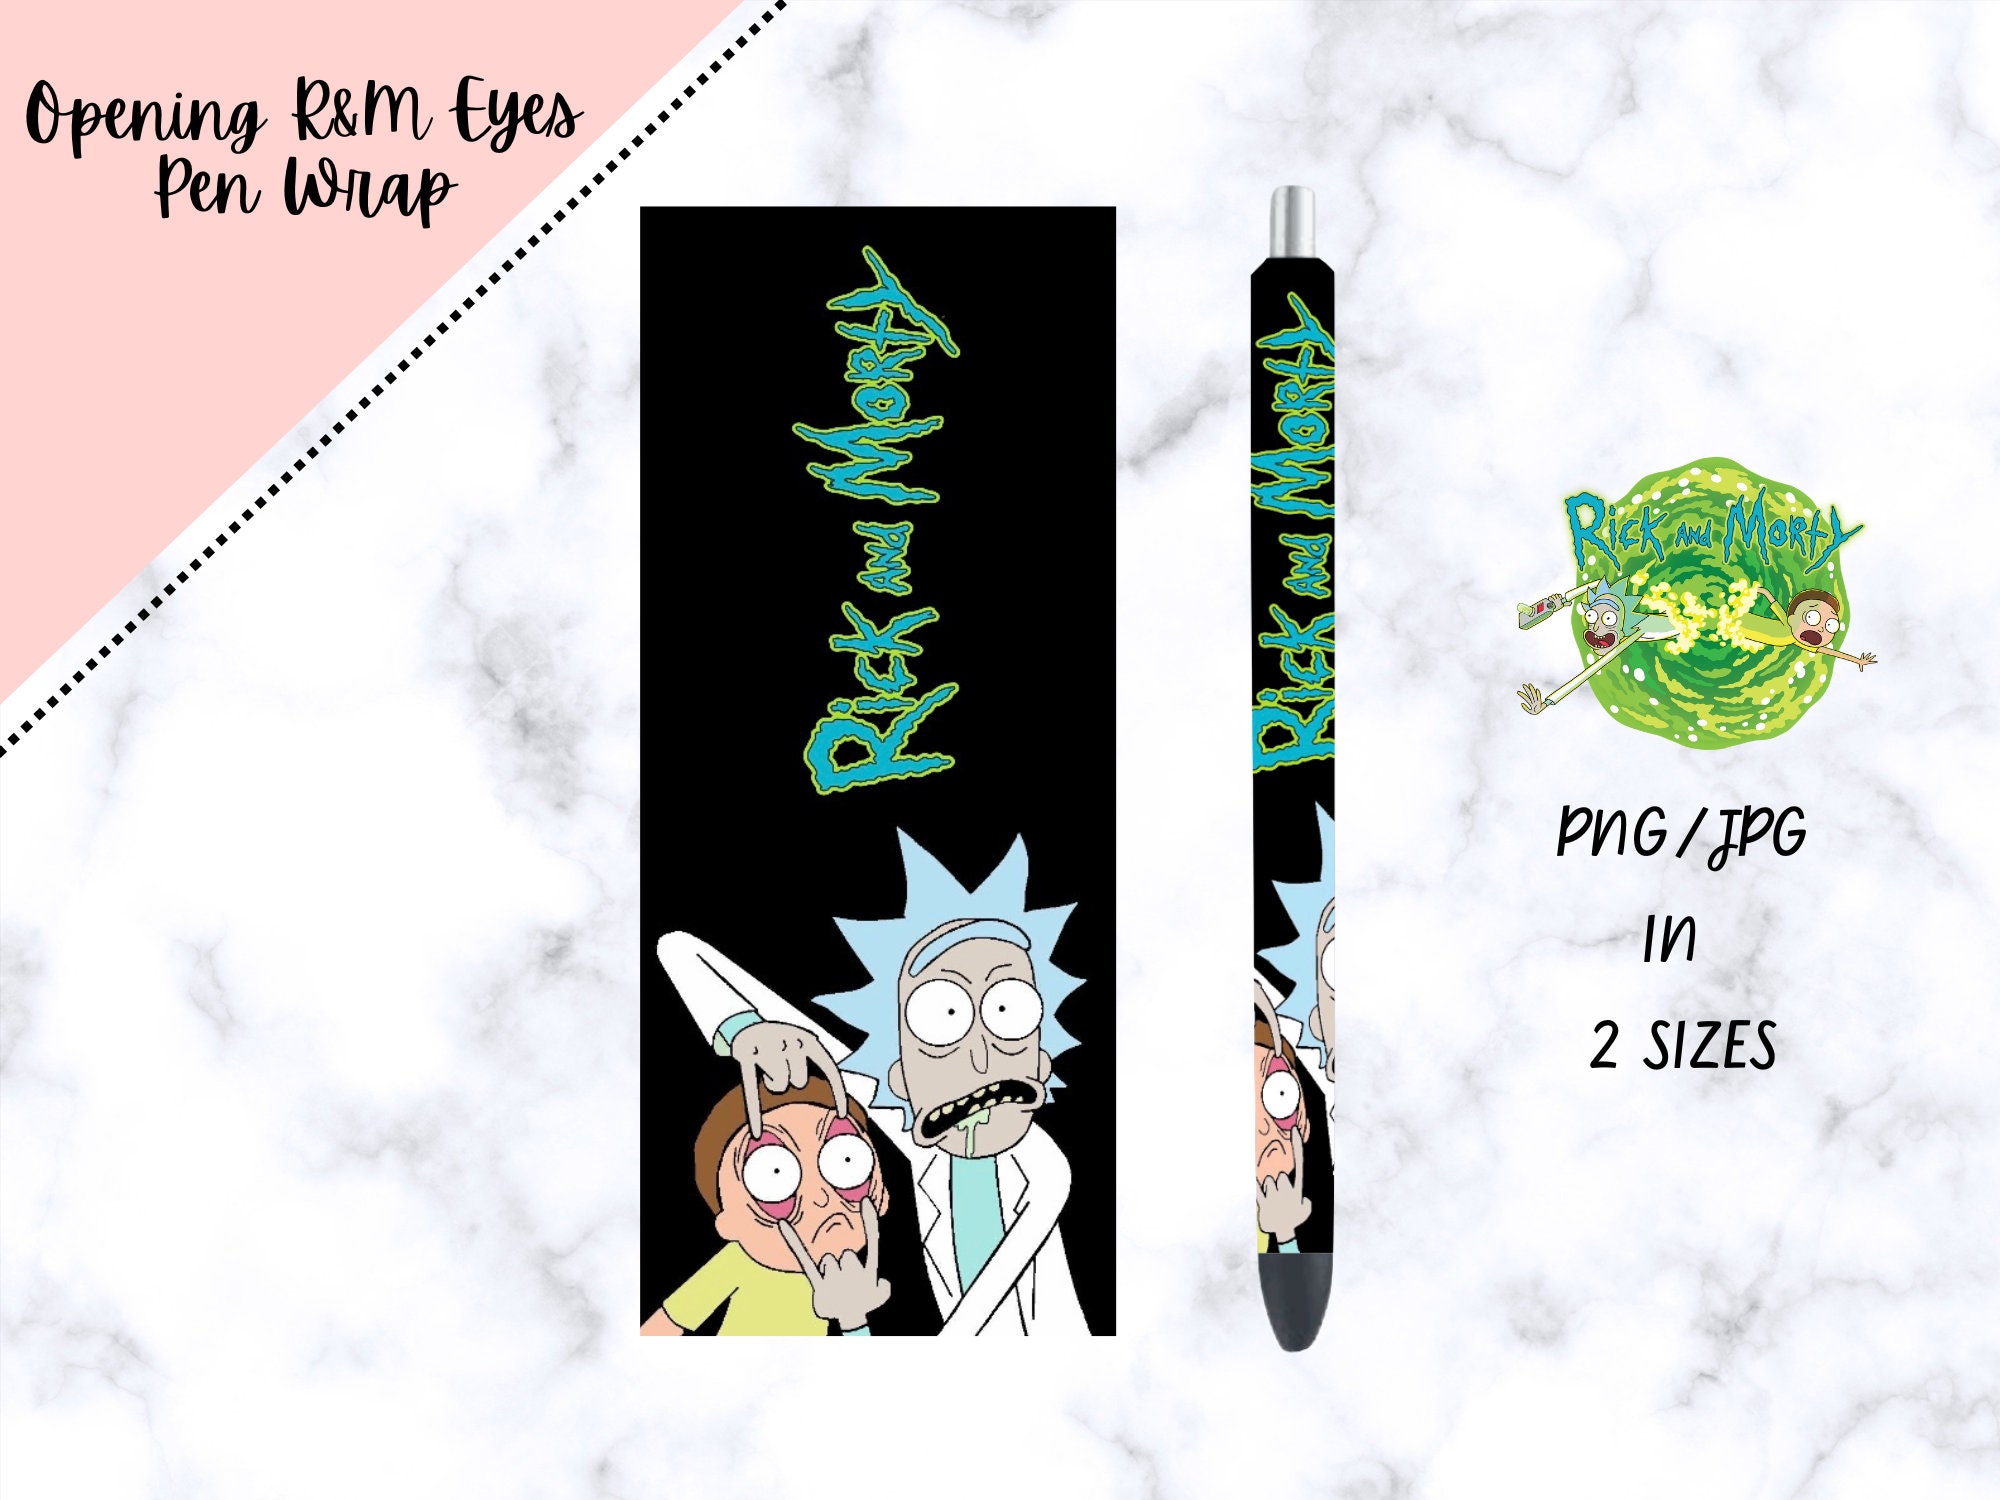 Rick and Morty Spiritual Rick w 3rd Eye Sticker by Carter Briar - Pixels